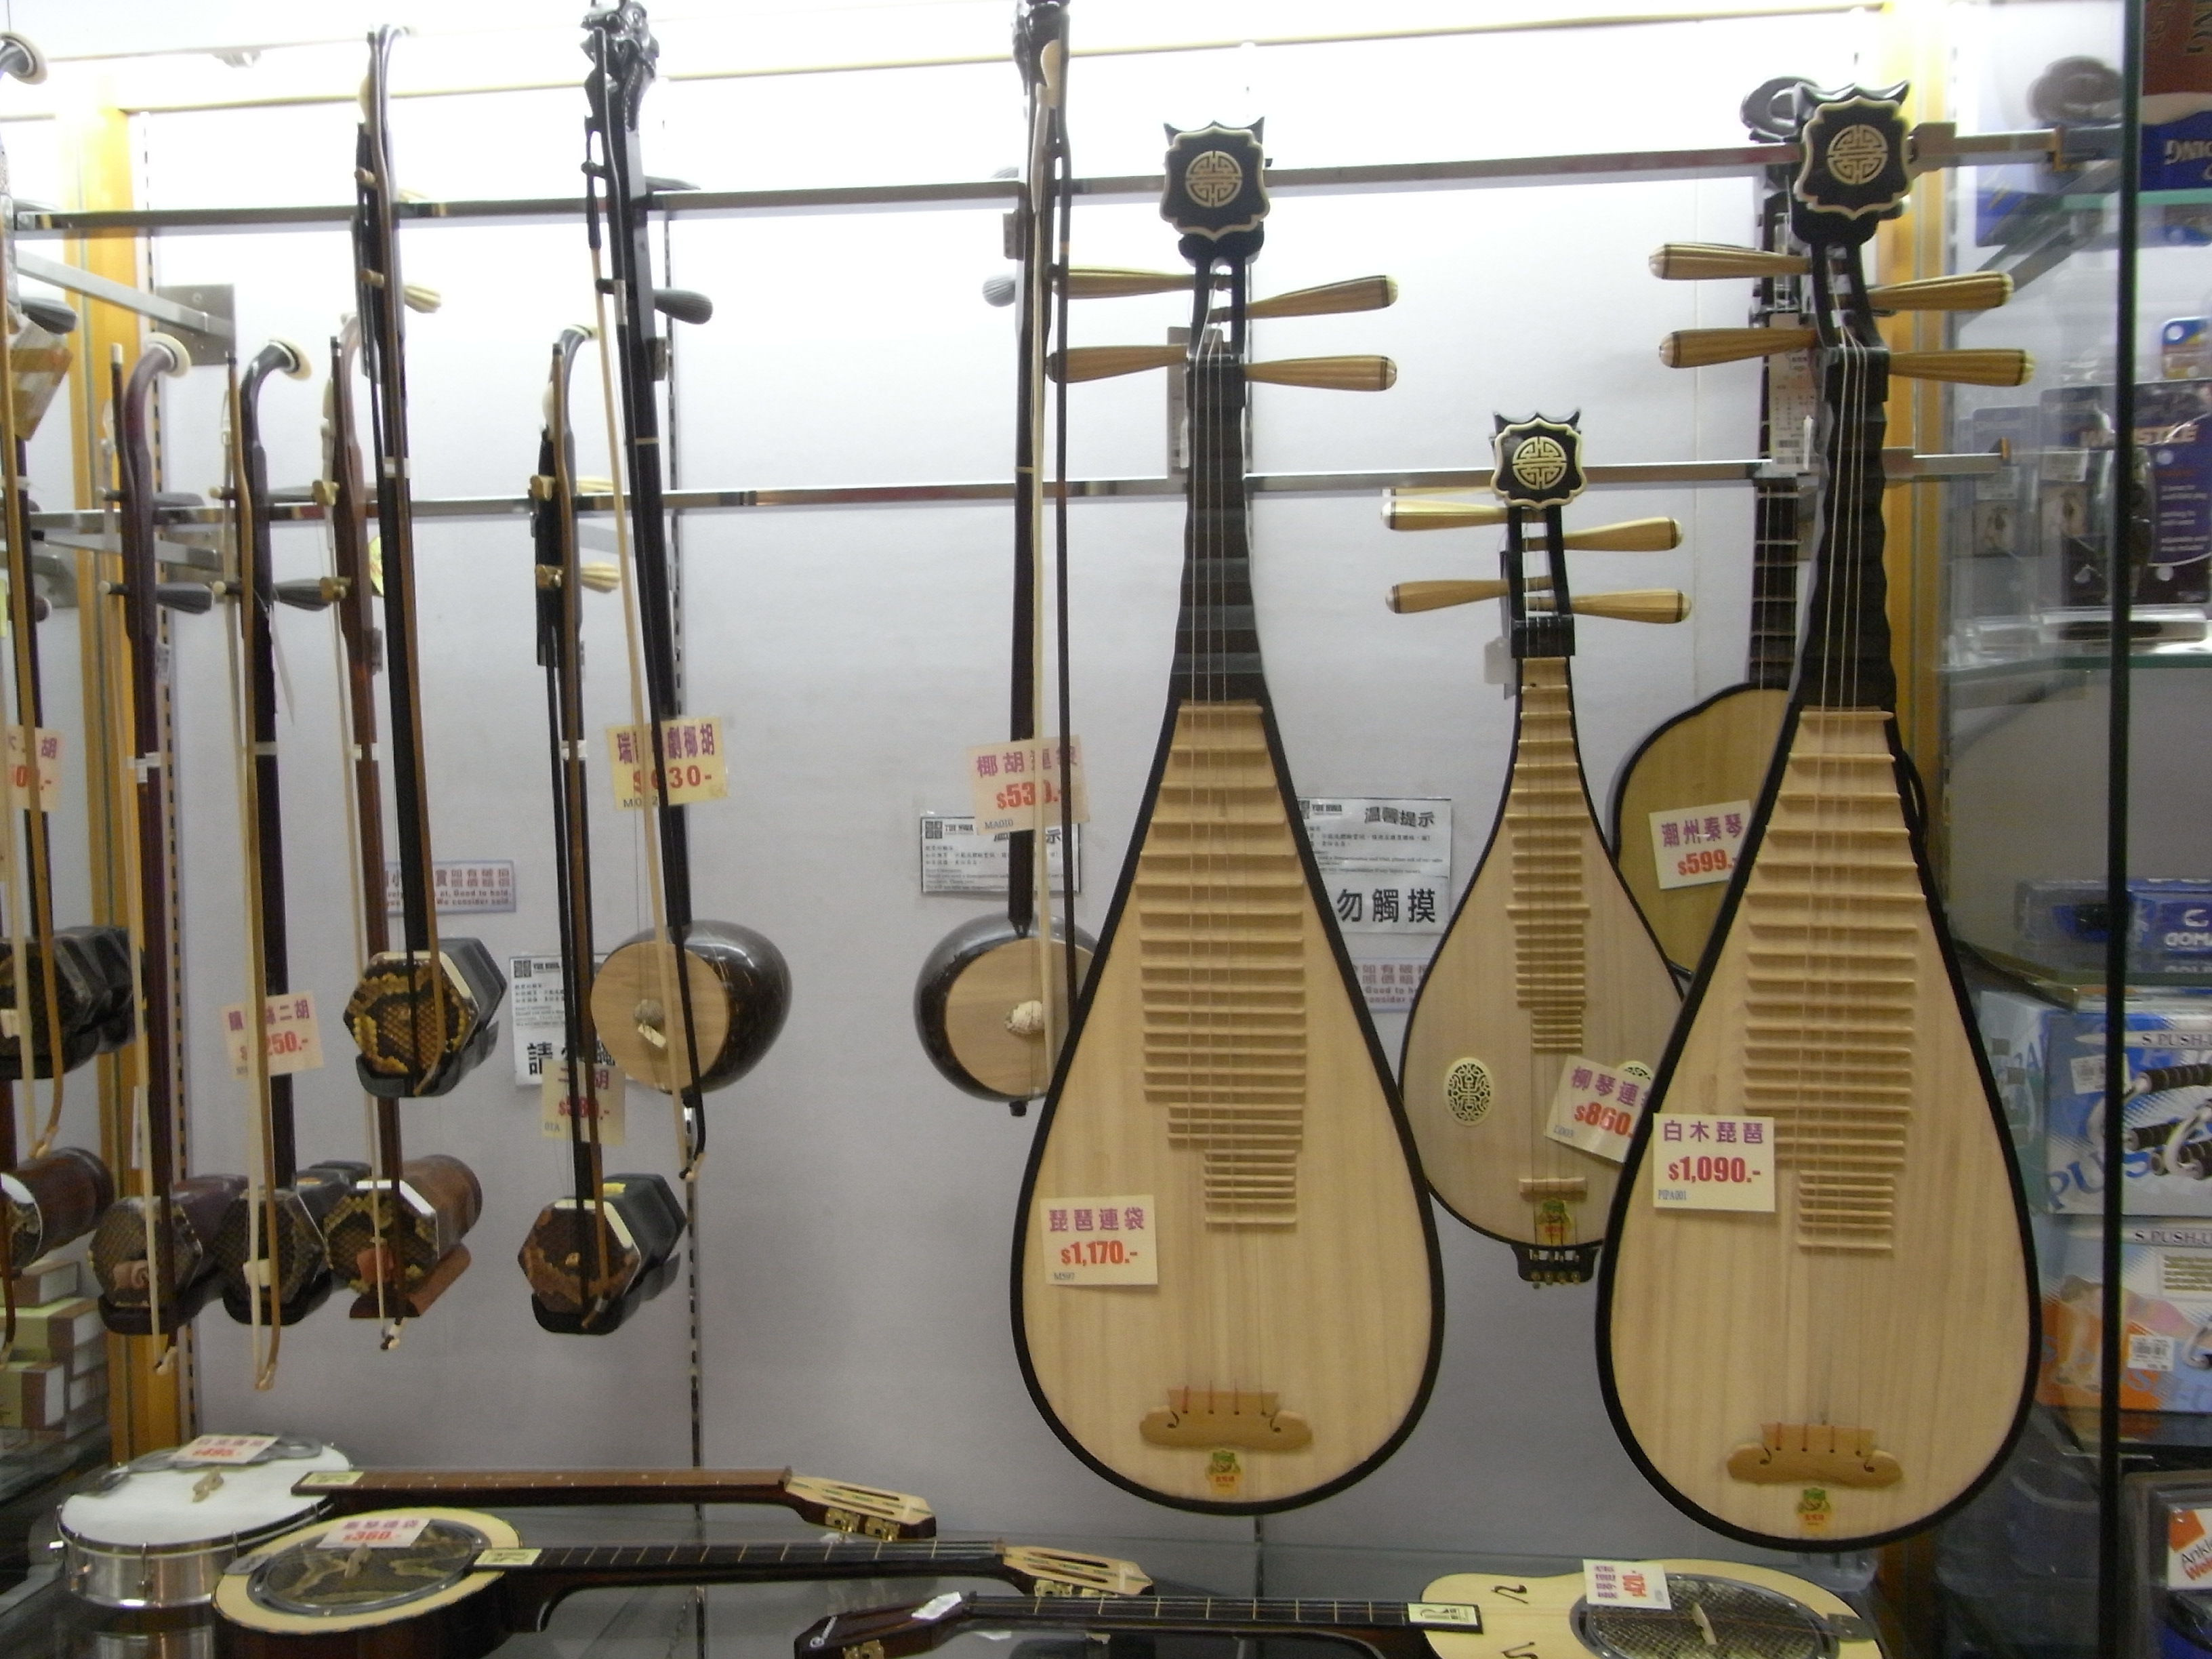 String instrument - Wikipedia